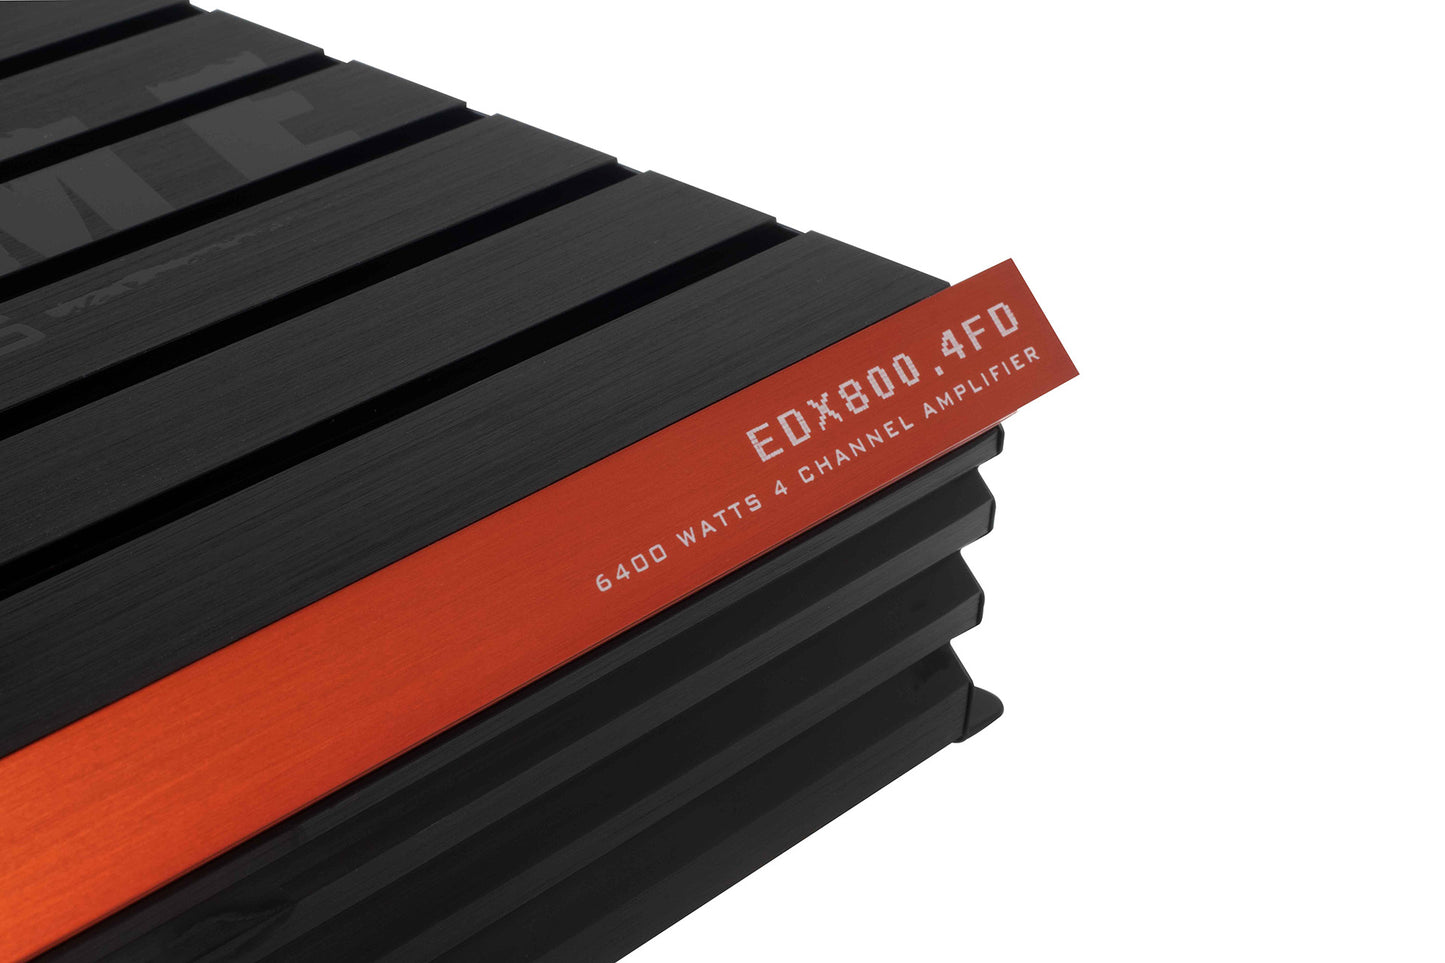 EDX800.4FD-E0 | EDGE Xtreme Series 4 Channel 6400 watts Amplifier